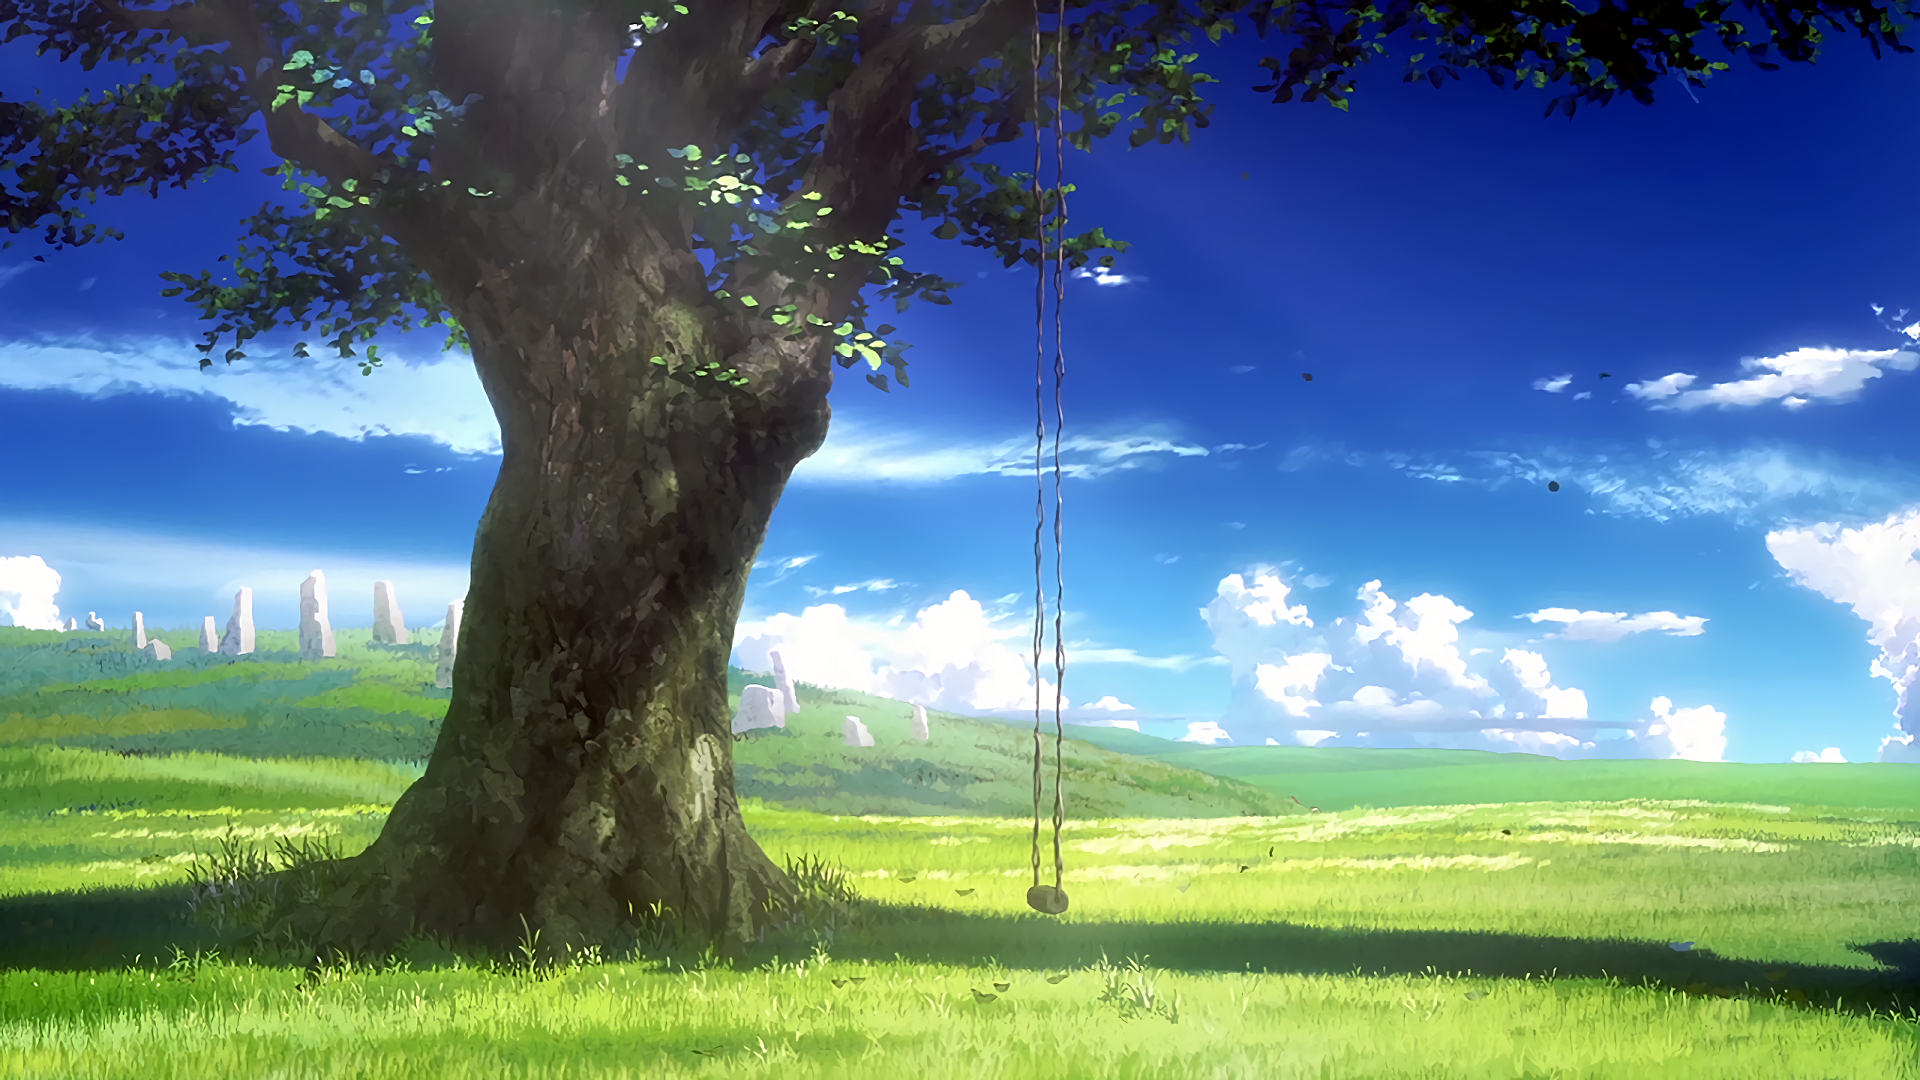 anime nature wallpaper,sky,natural landscape,nature,tree,grassland